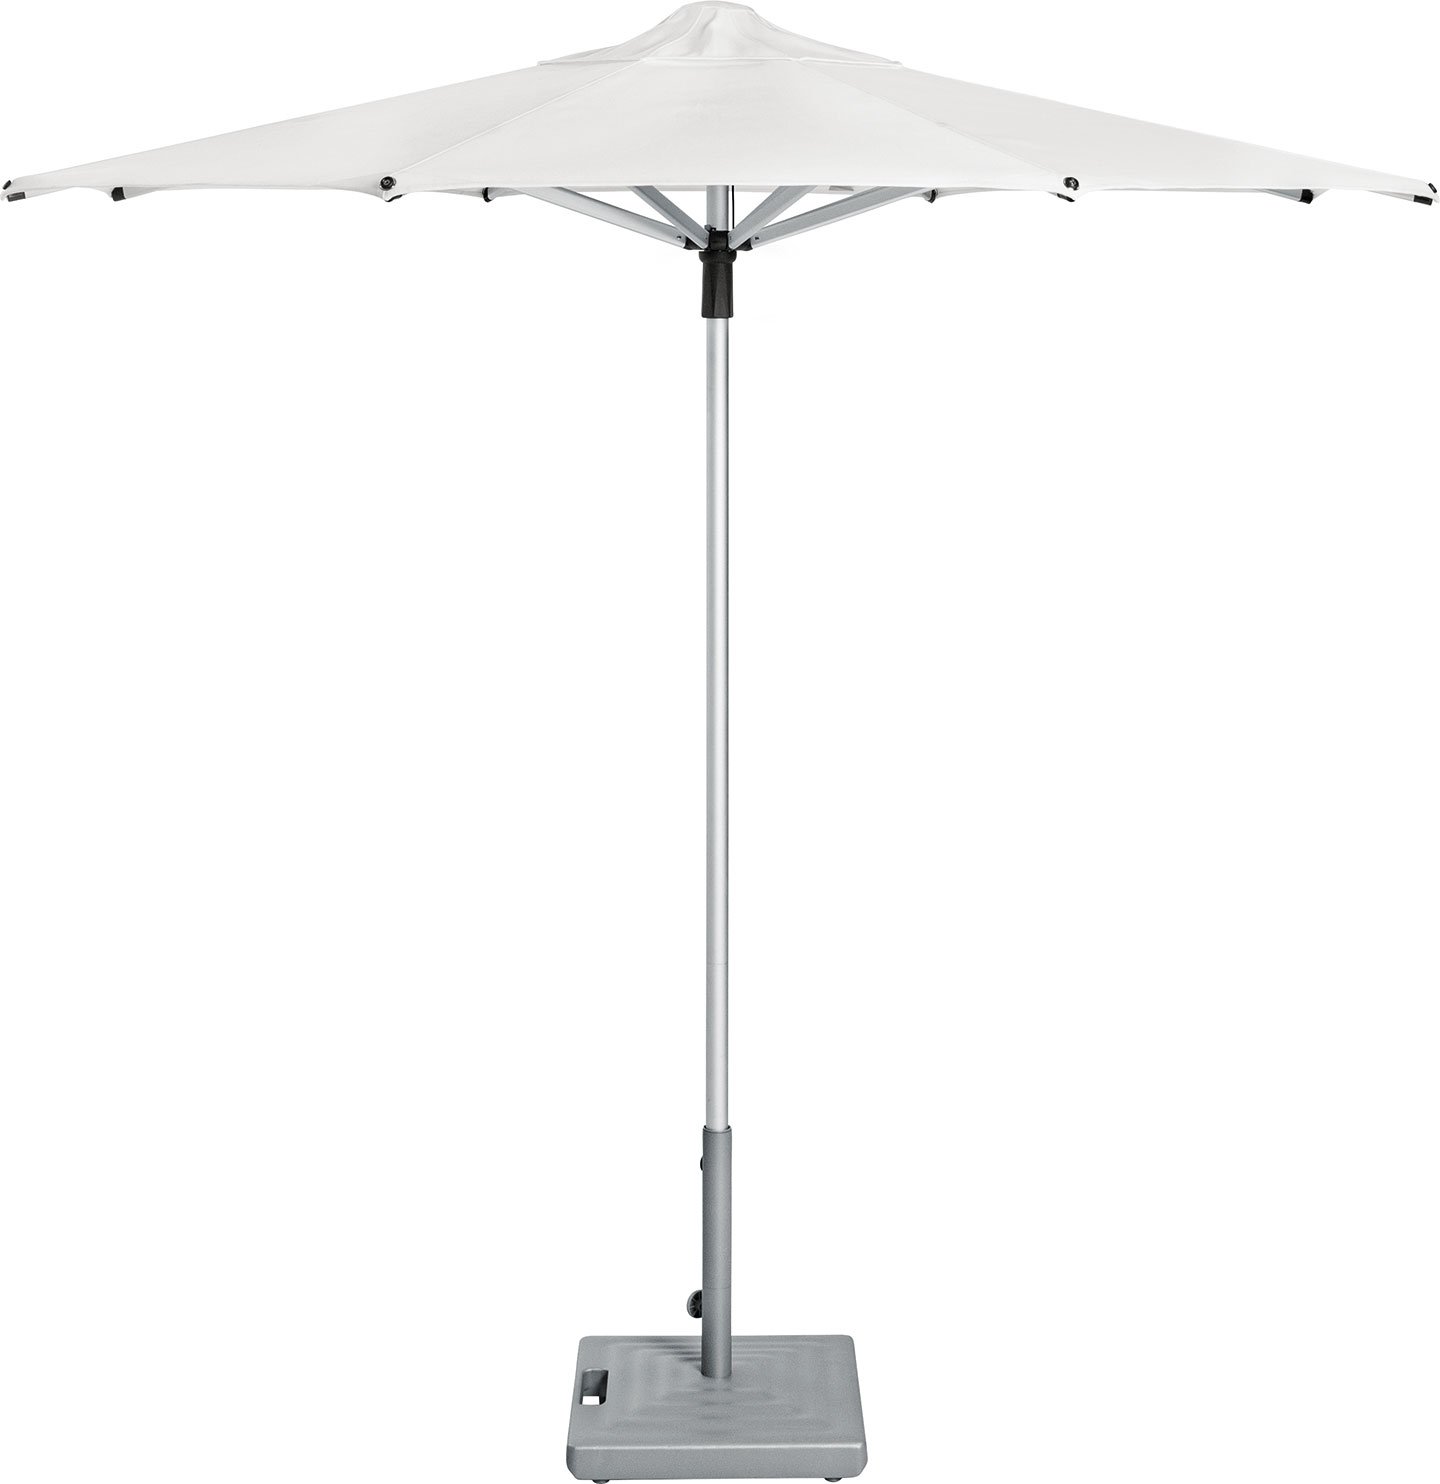 Haworth Janus Titan Umbrella Accessories with white top and grey base